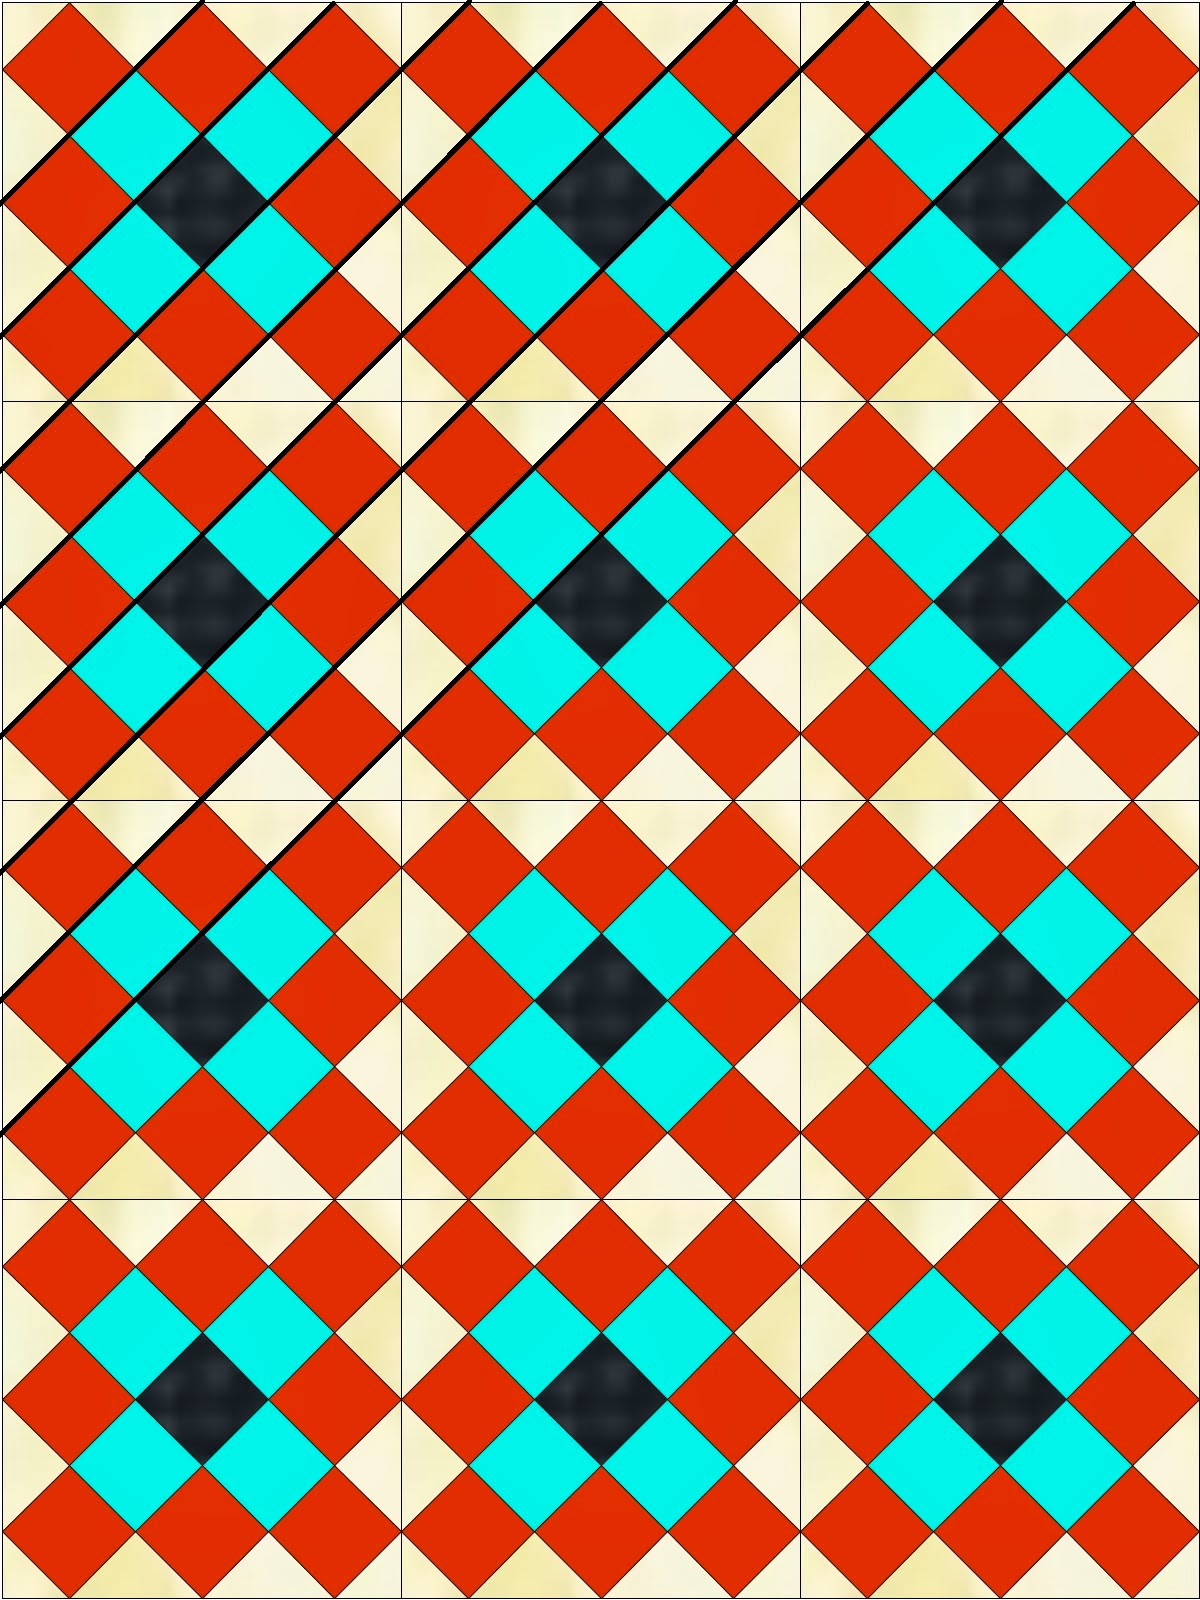 diagonal square quilt instructions